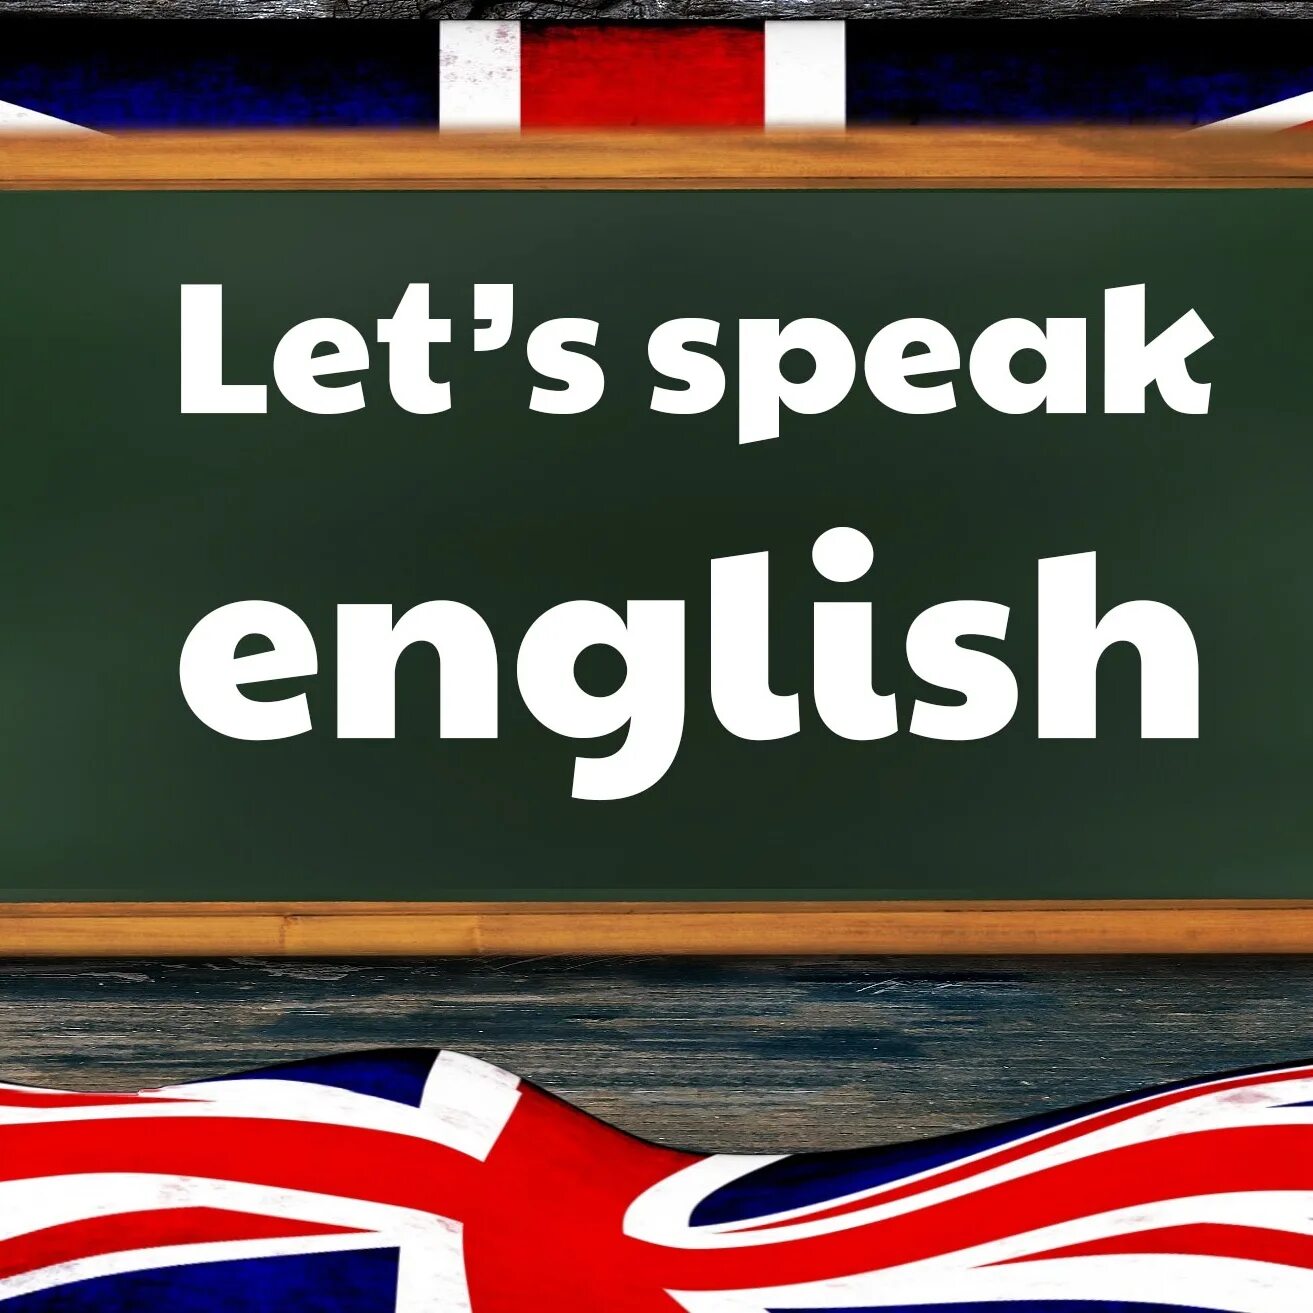 We can speak english. Английский язык. Анилий. Английский ч з х. Урок английского языка.